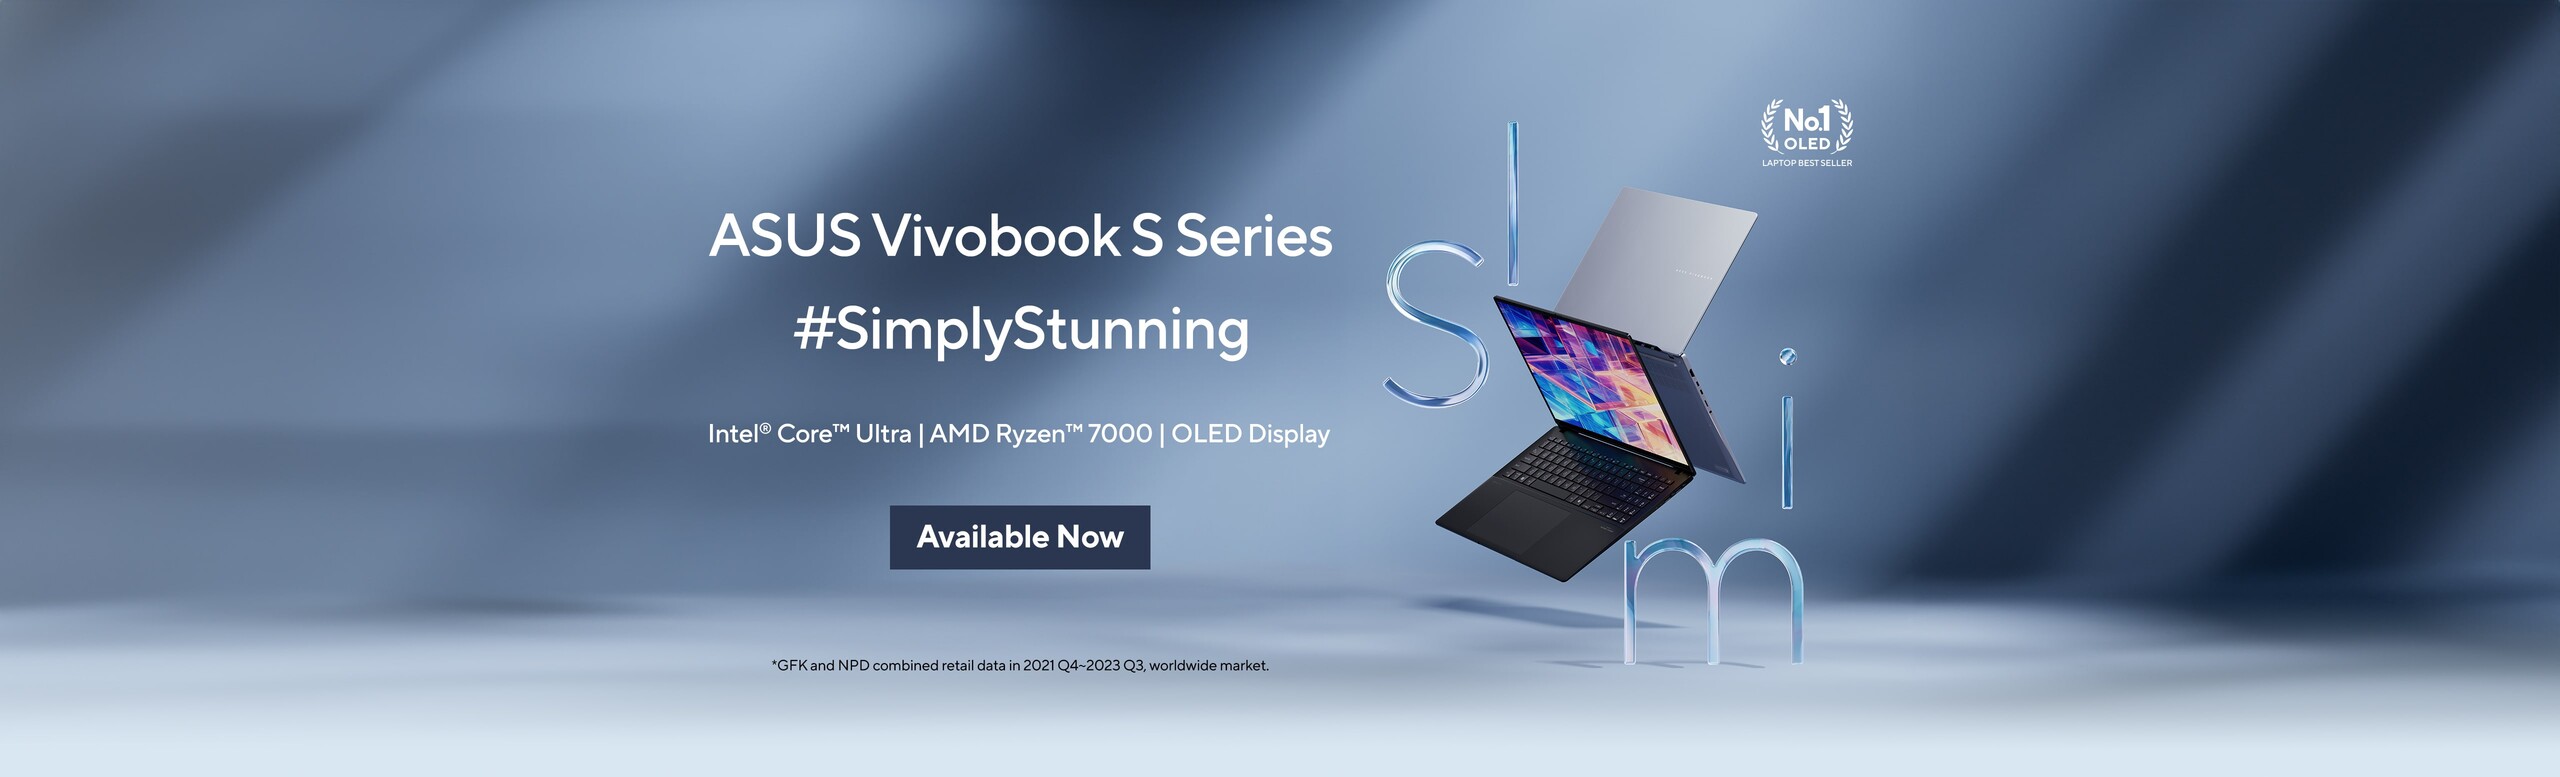 Vivobook S series post launch